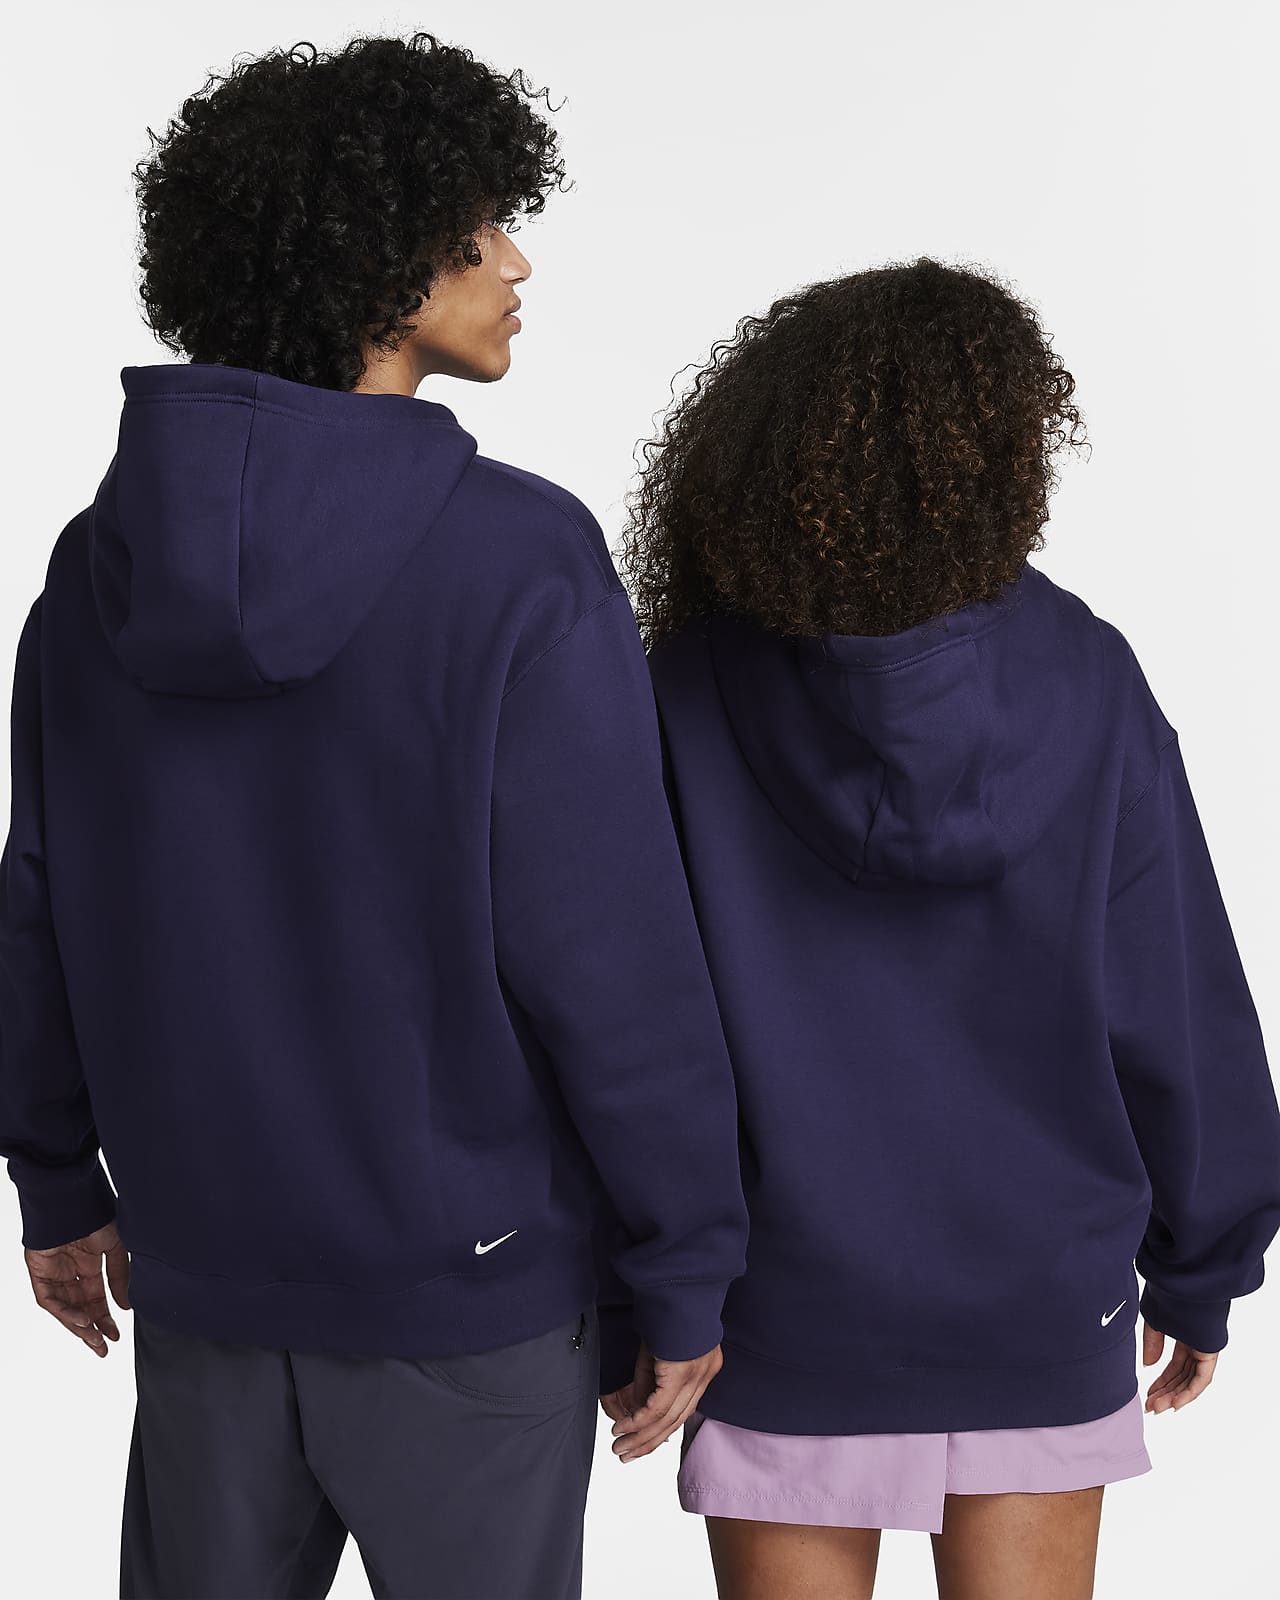 LoGOAT Super Comfy Hoodie Sweatshirt Kids Size!